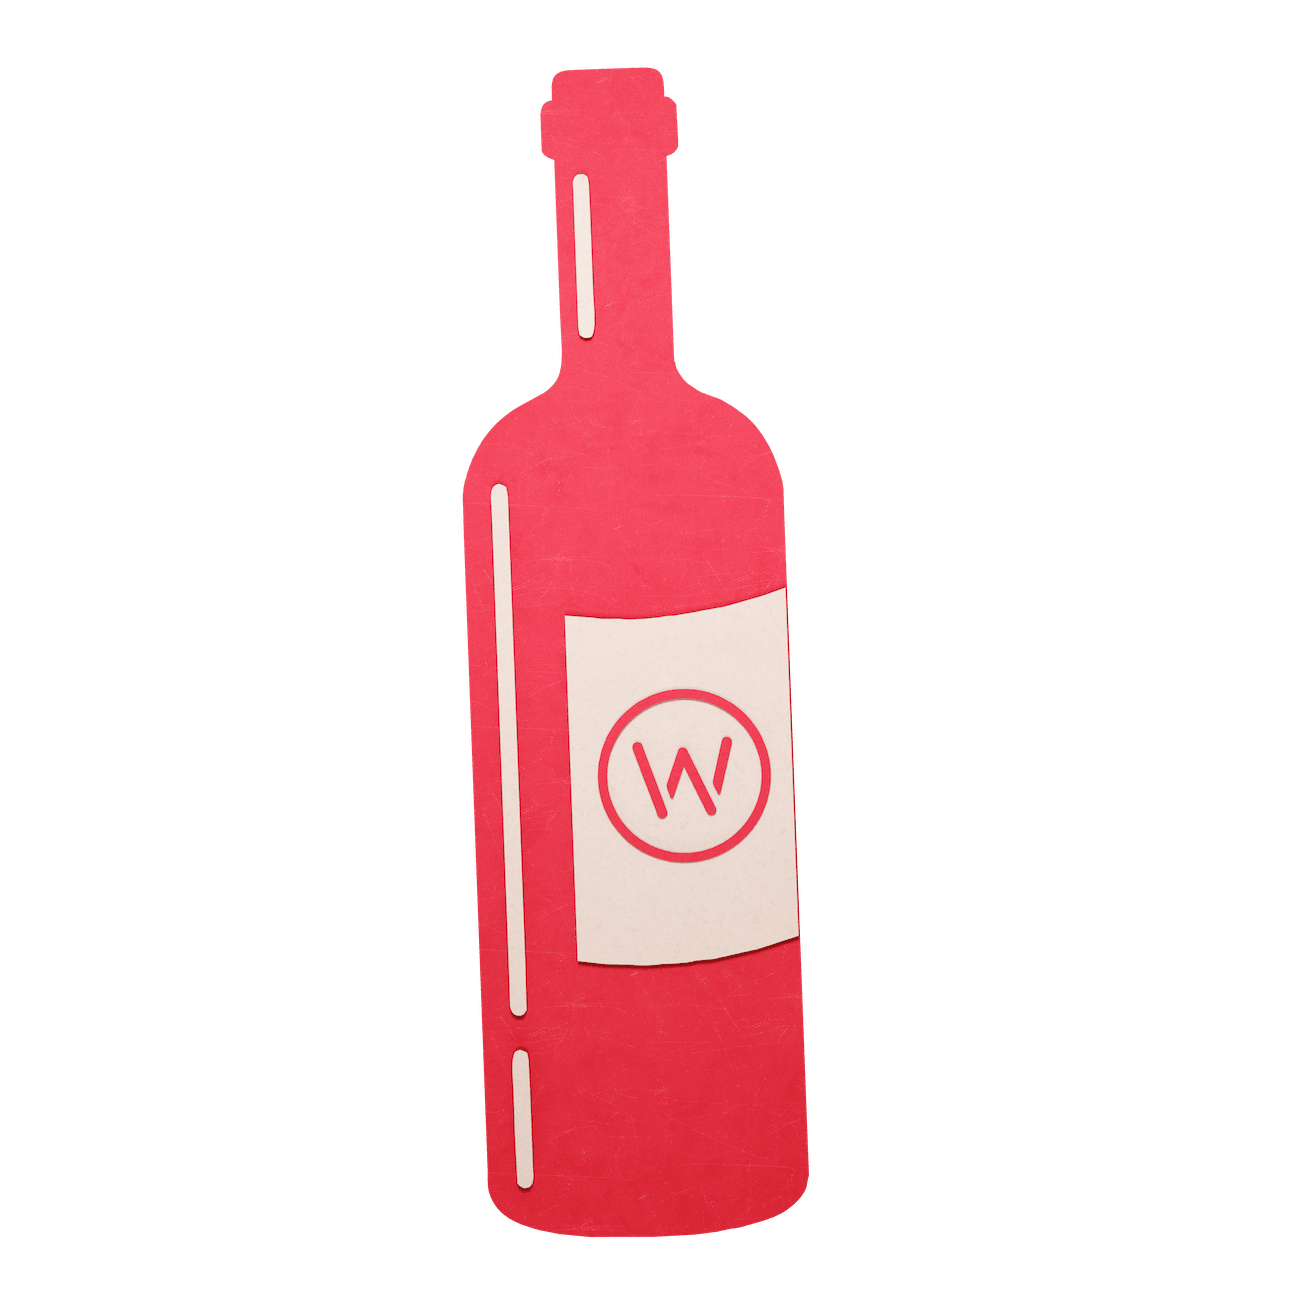 En snurrande röd vinflaska